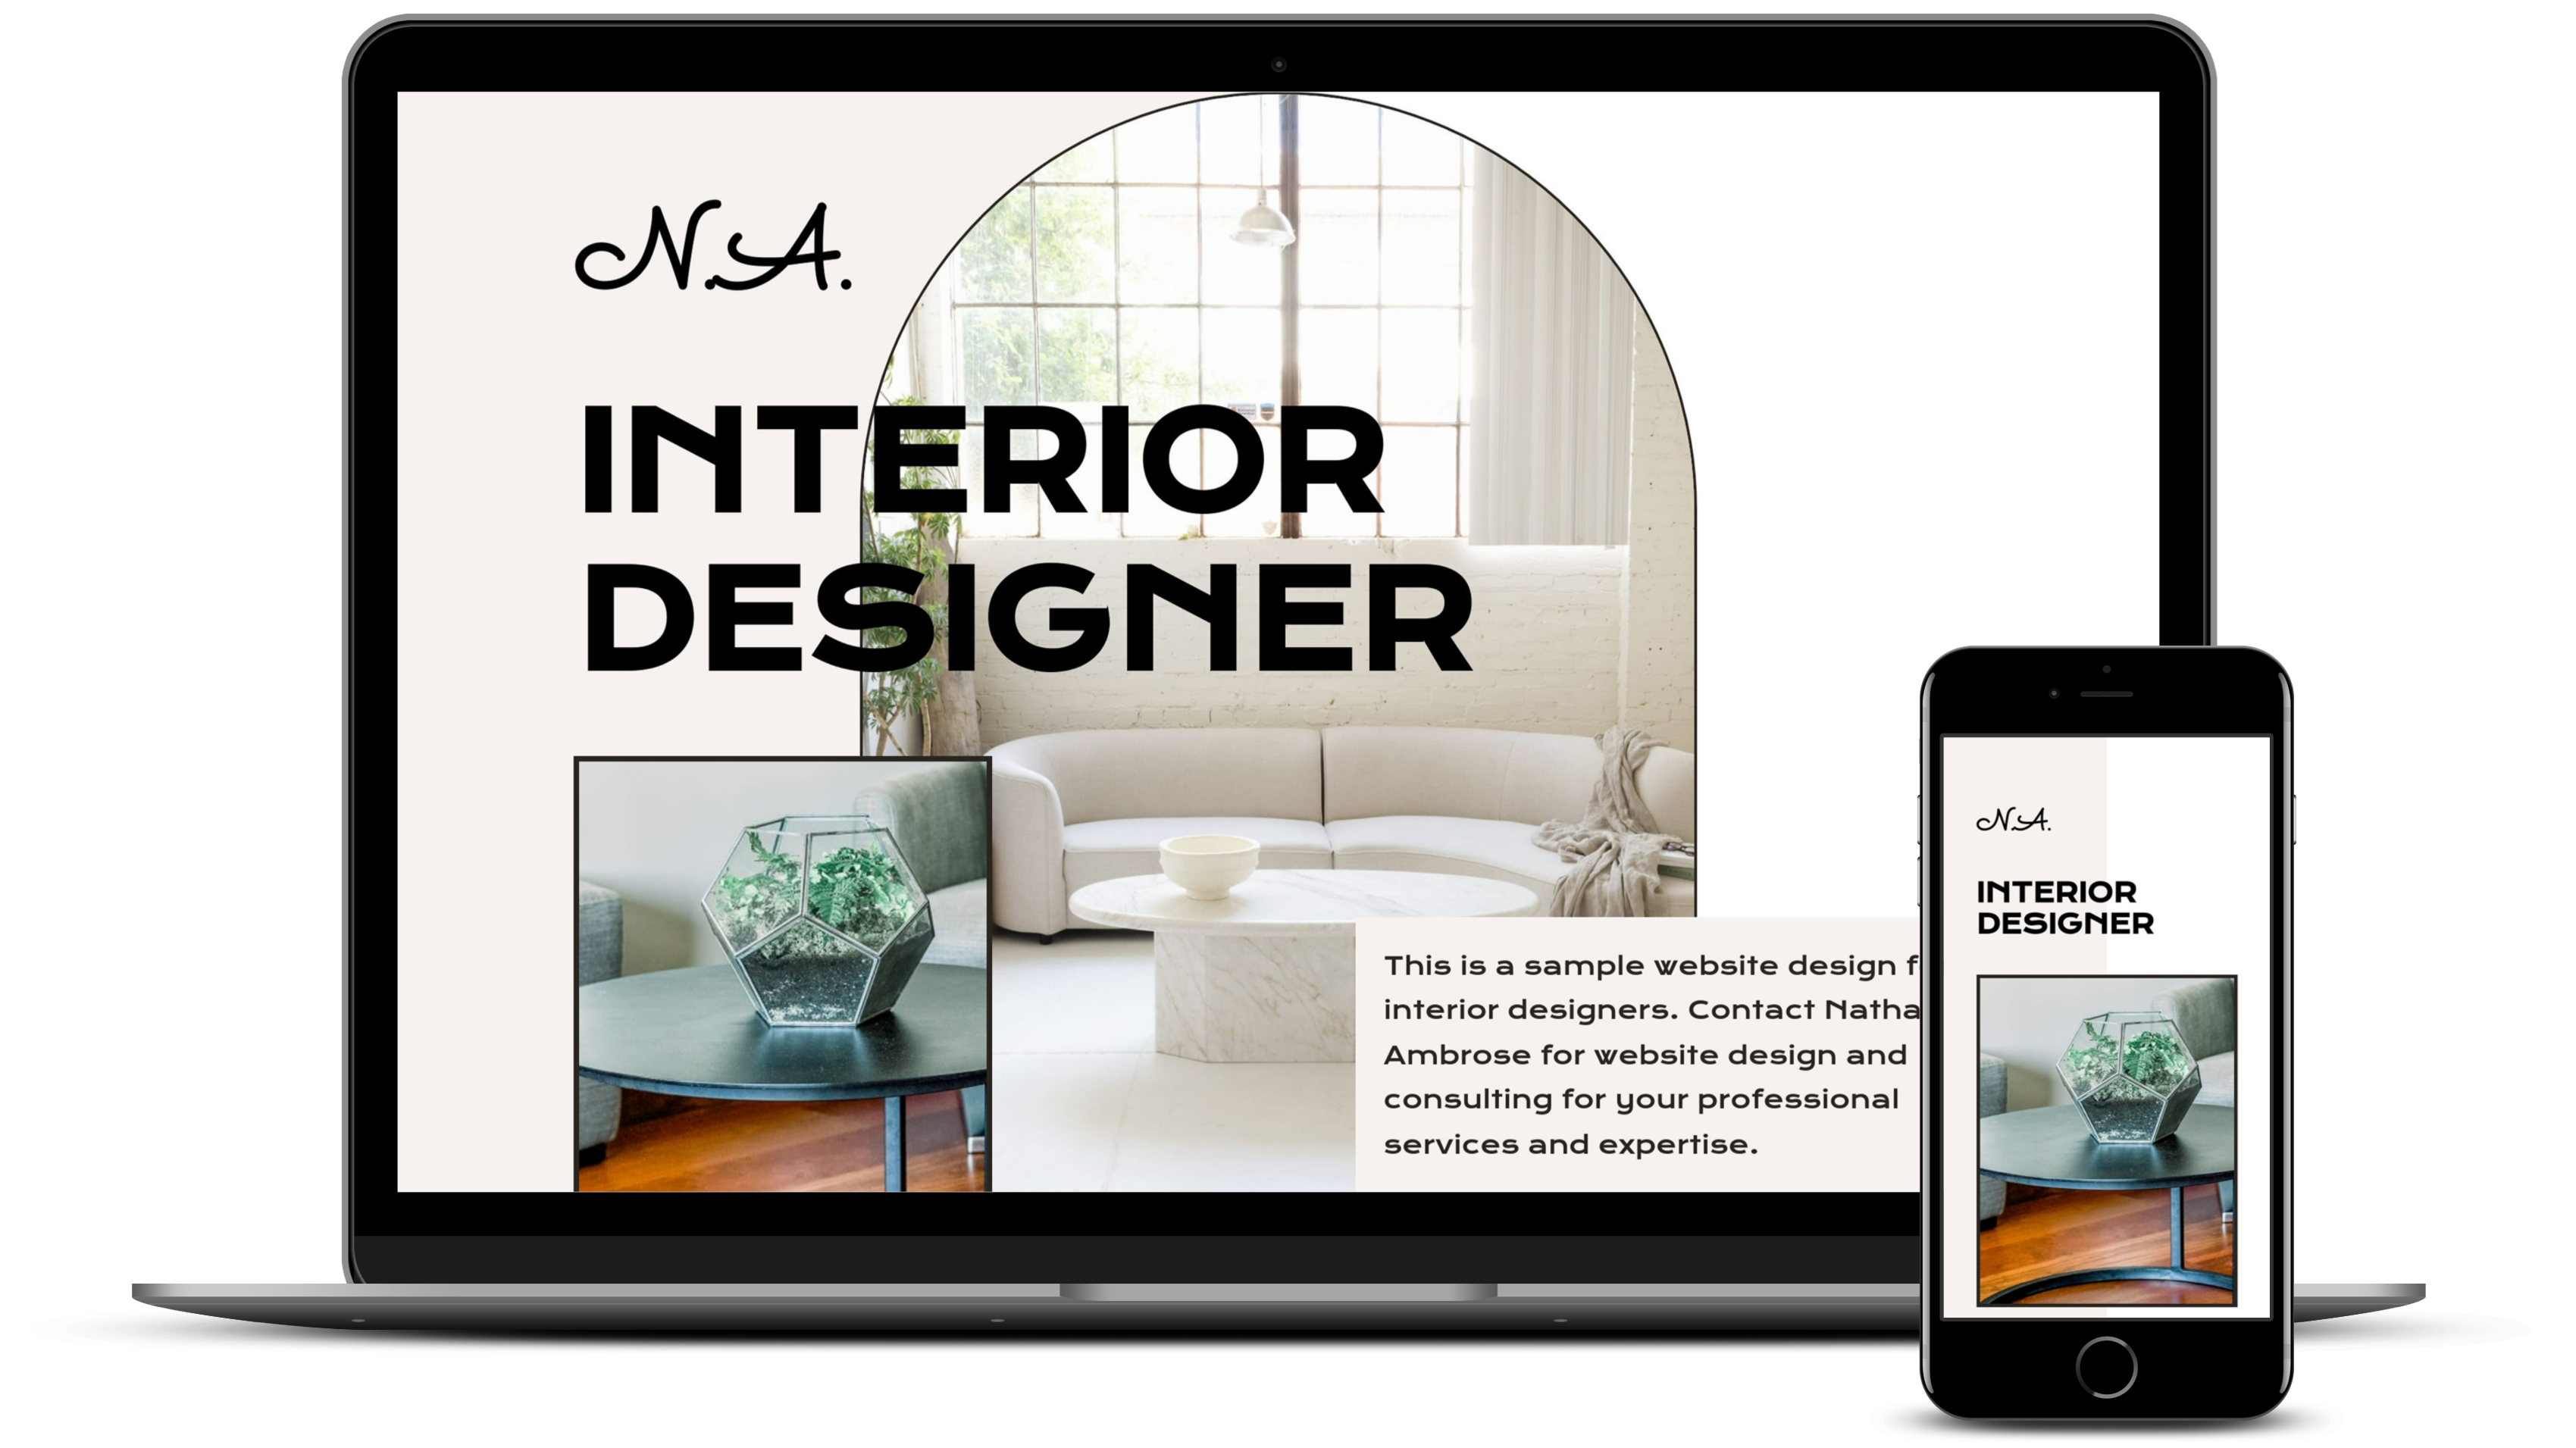 Website Design for Interior Designers, by Nathan Ambrose.